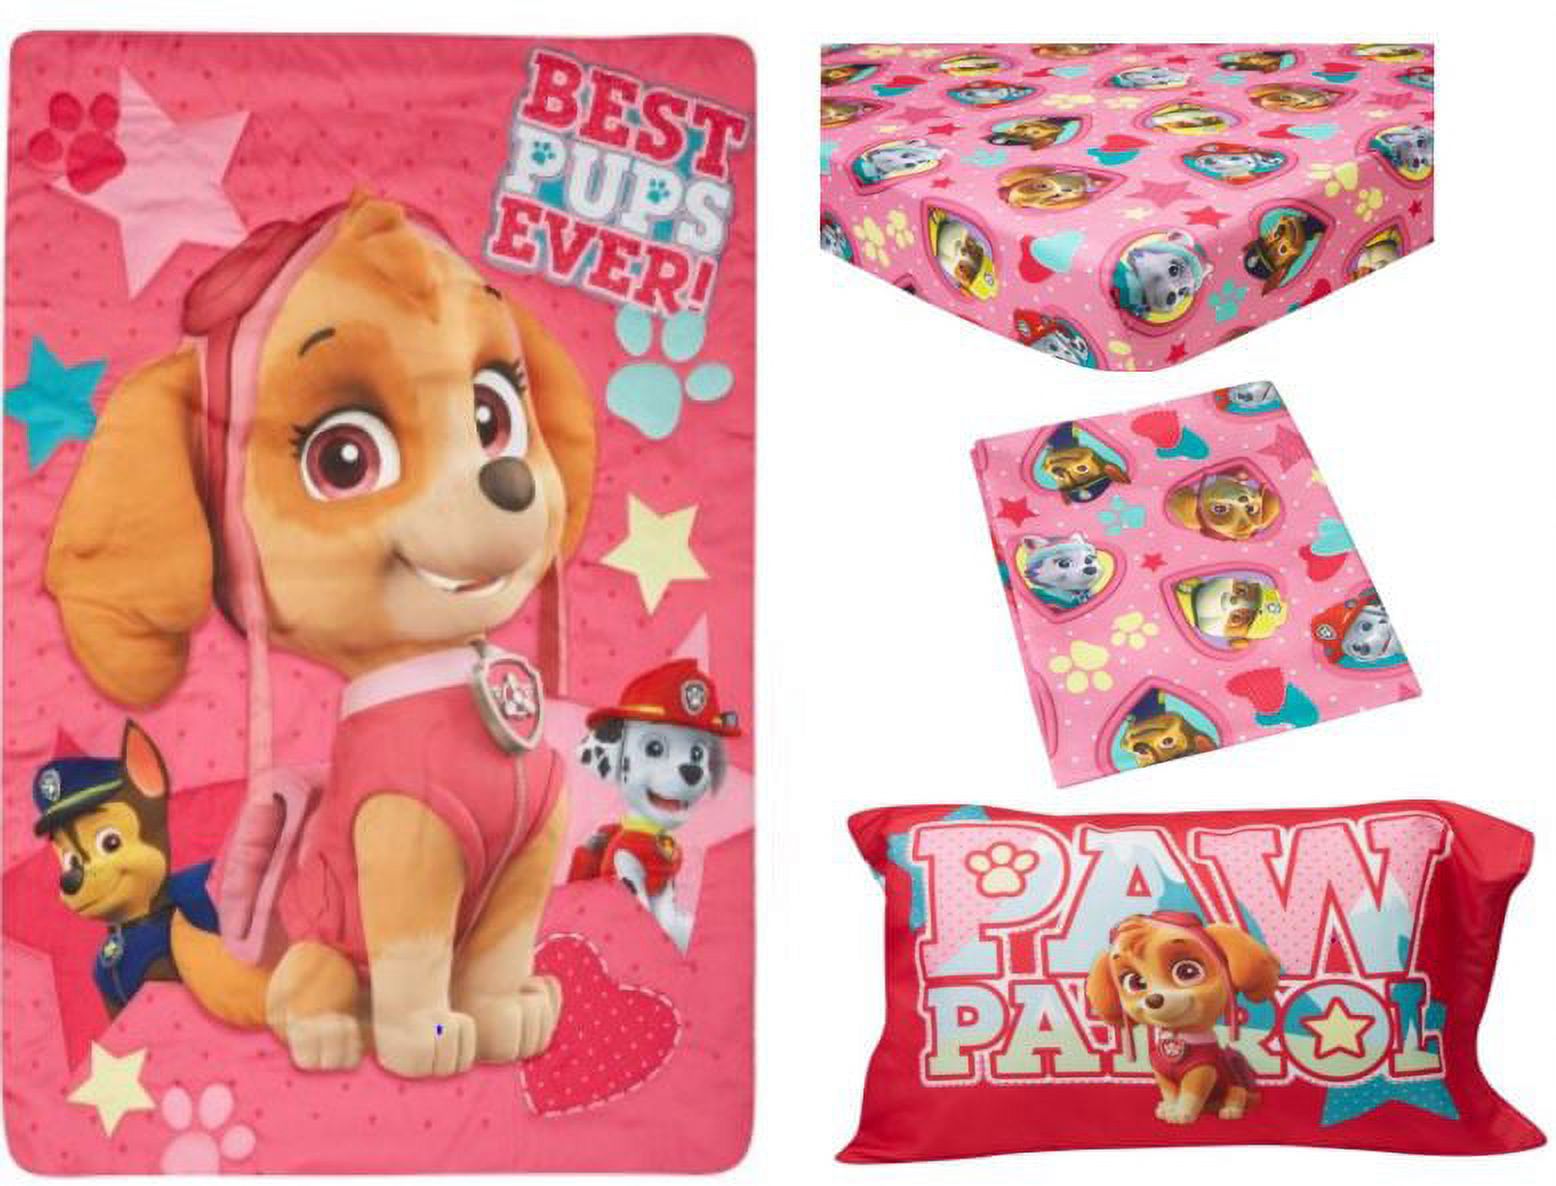 BabyBoom Nick Jr PAW Patrol Skye Best Pups Ever 4-Piece Toddler Bedding Set - image 1 of 6